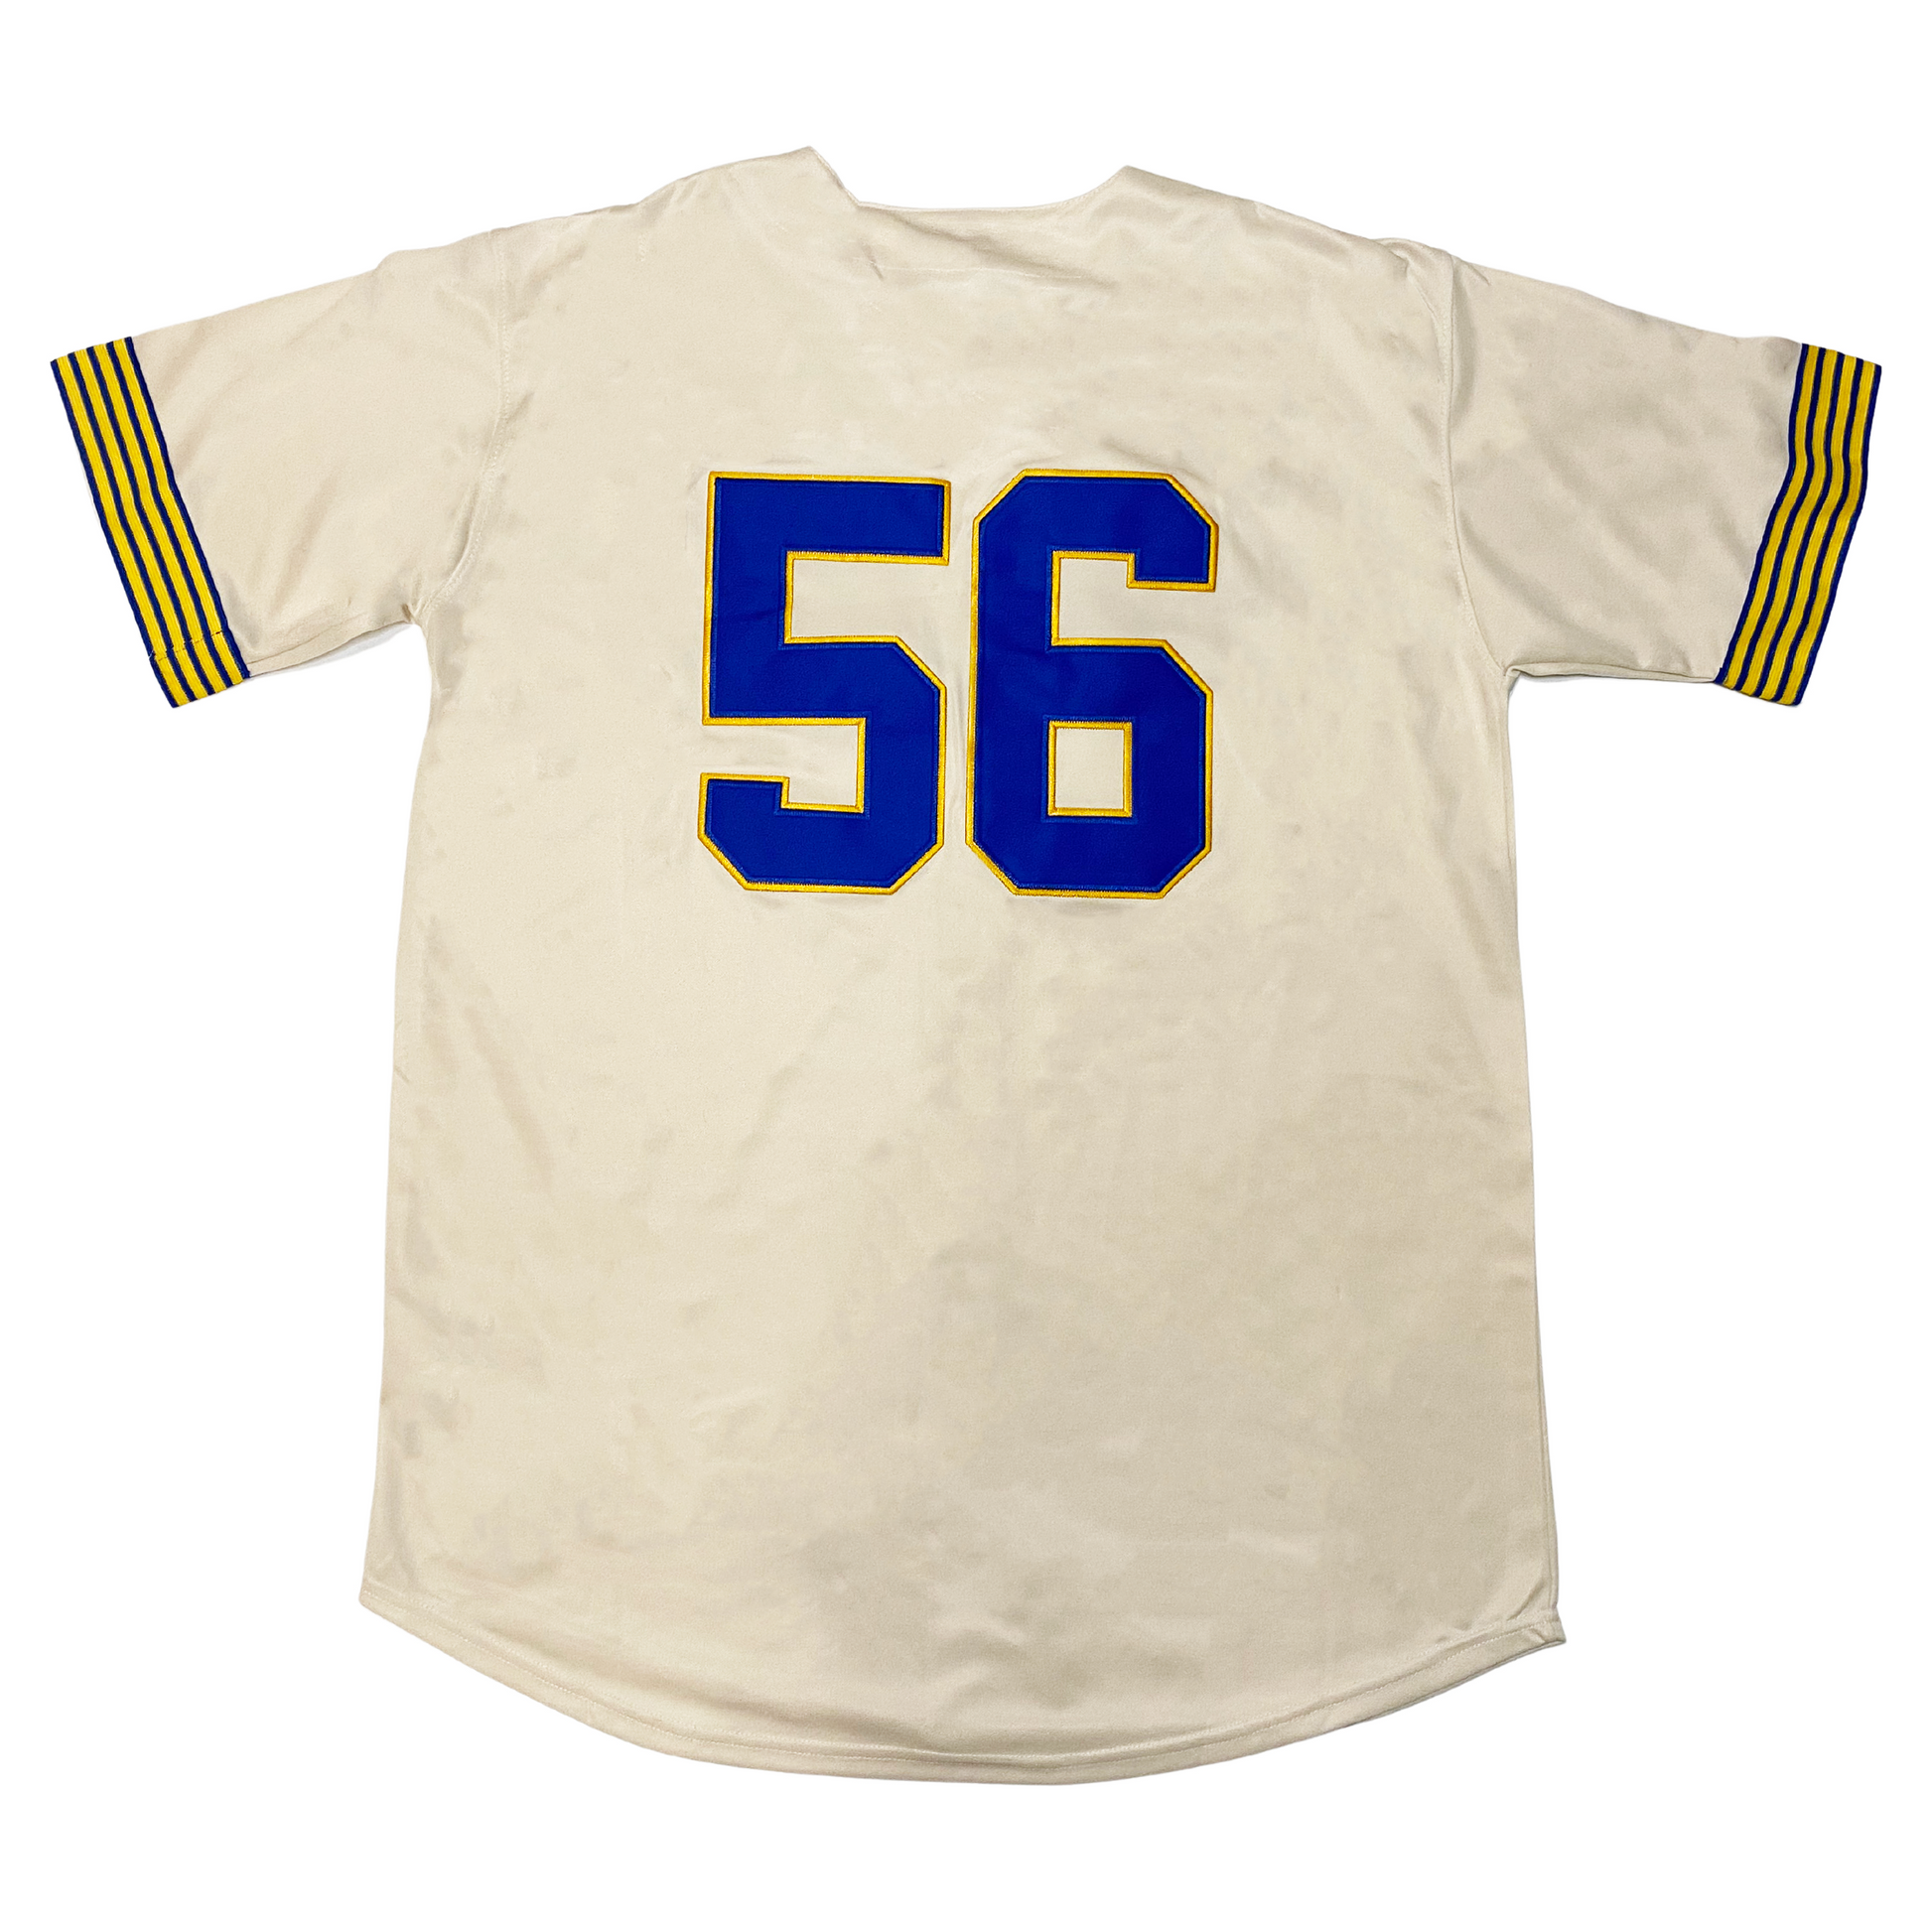 1969 Seattle Pilots Original & Unrestored Full Uniform. Baseball, Lot  #80459